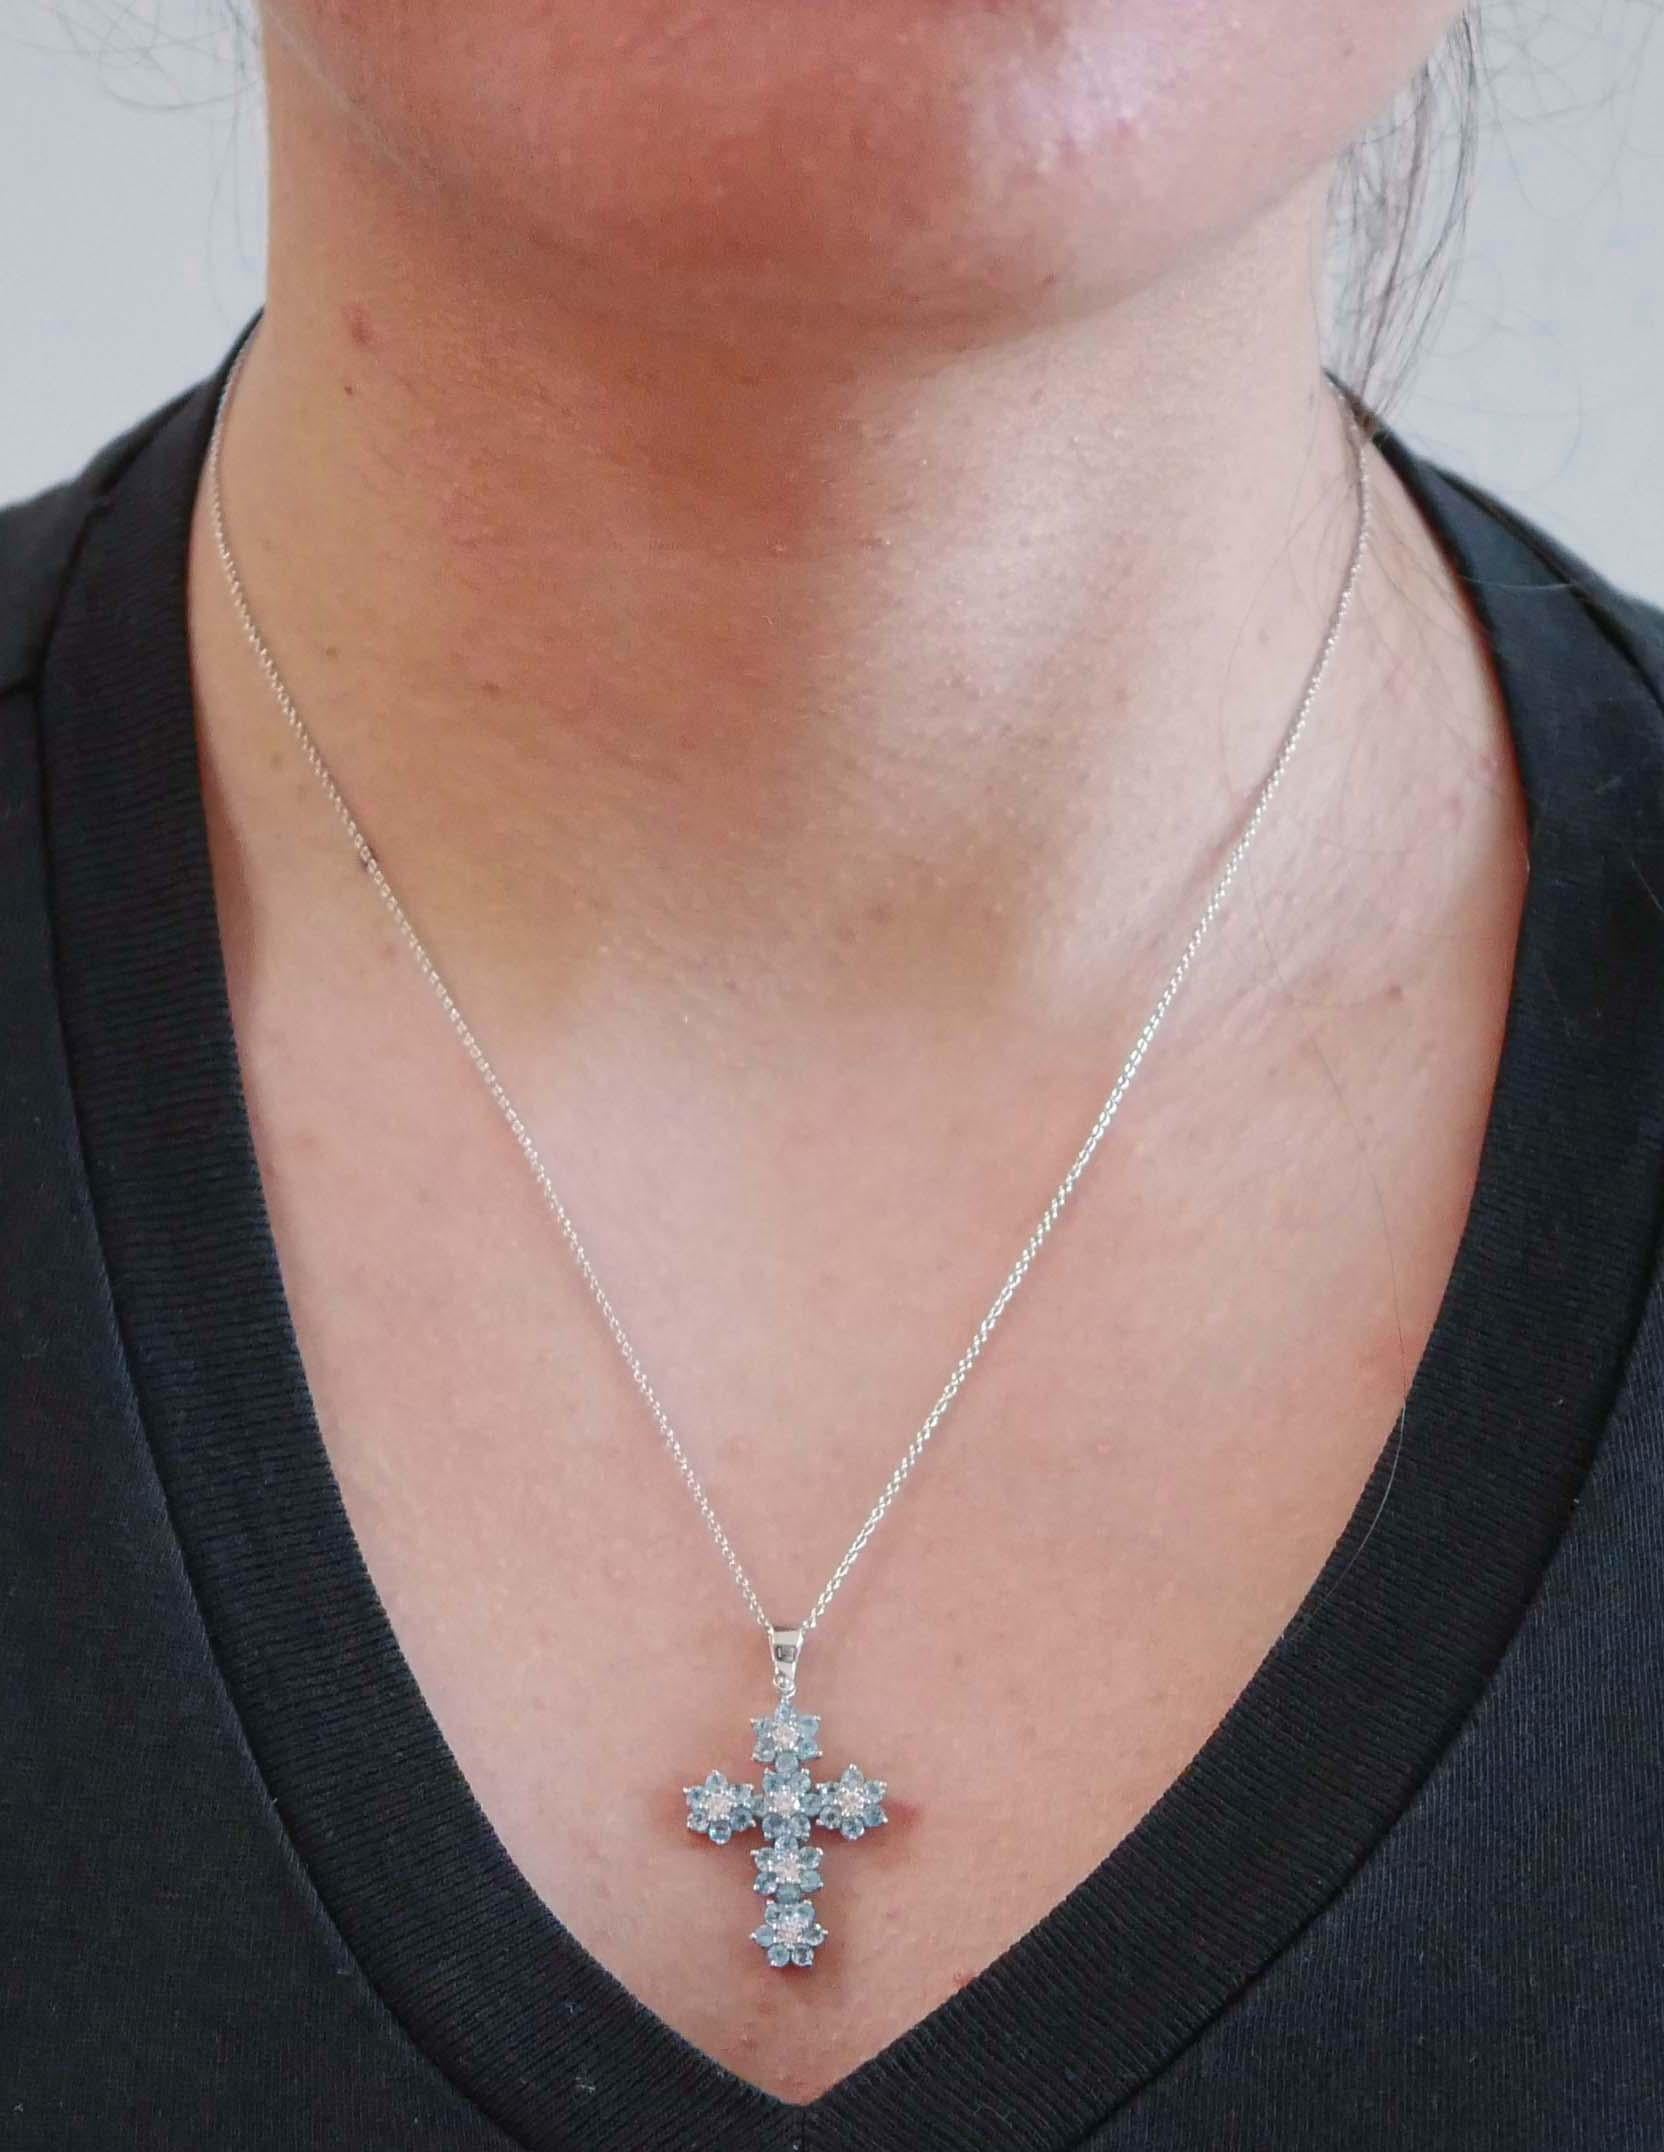 Women's Aquamarine, Diamonds, 18 Karat White Gold Pendant Necklace.